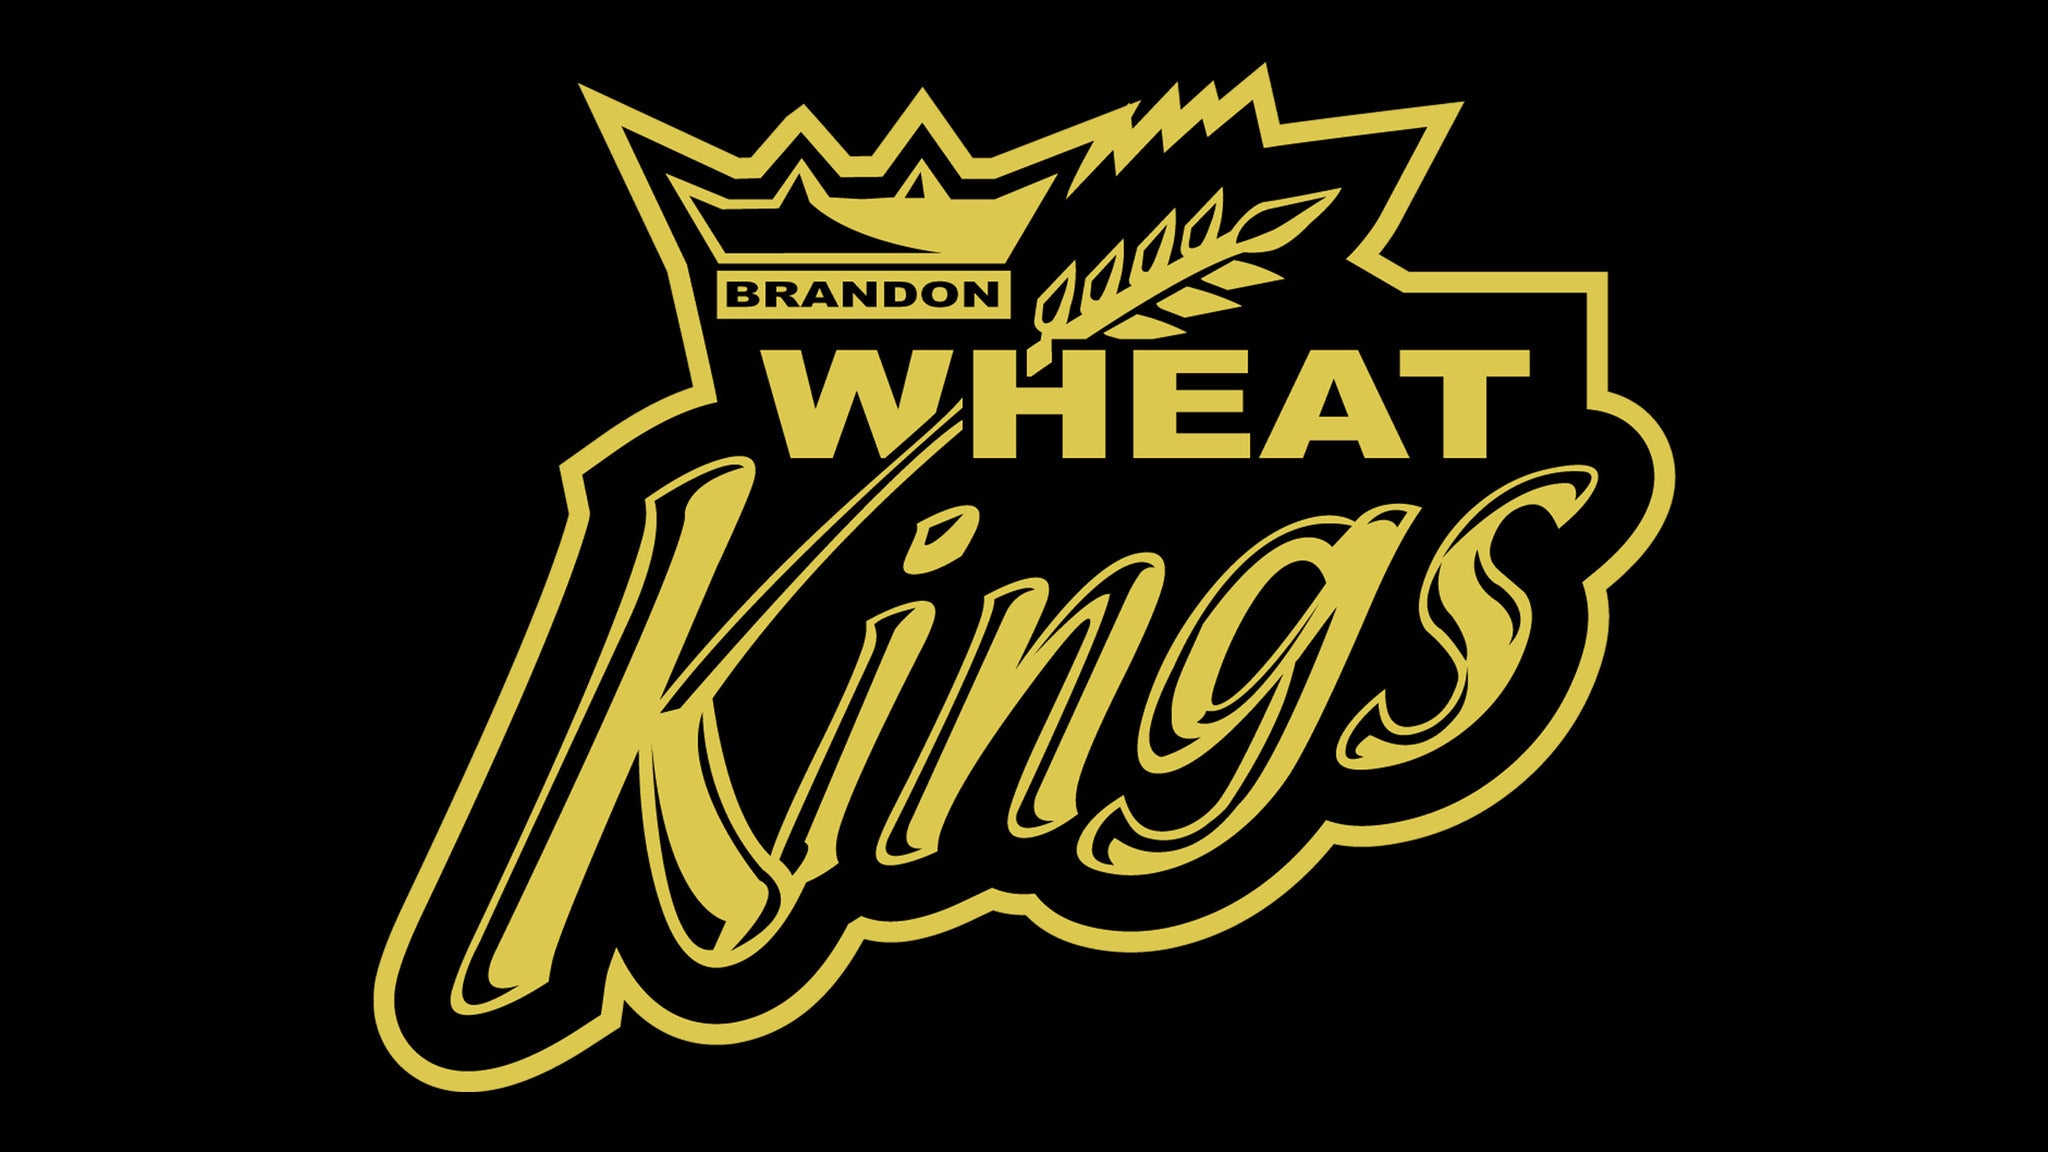 Brandon Wheat Kings vs. Prince Albert Raiders in Brandon promo photo for Timbits  presale offer code